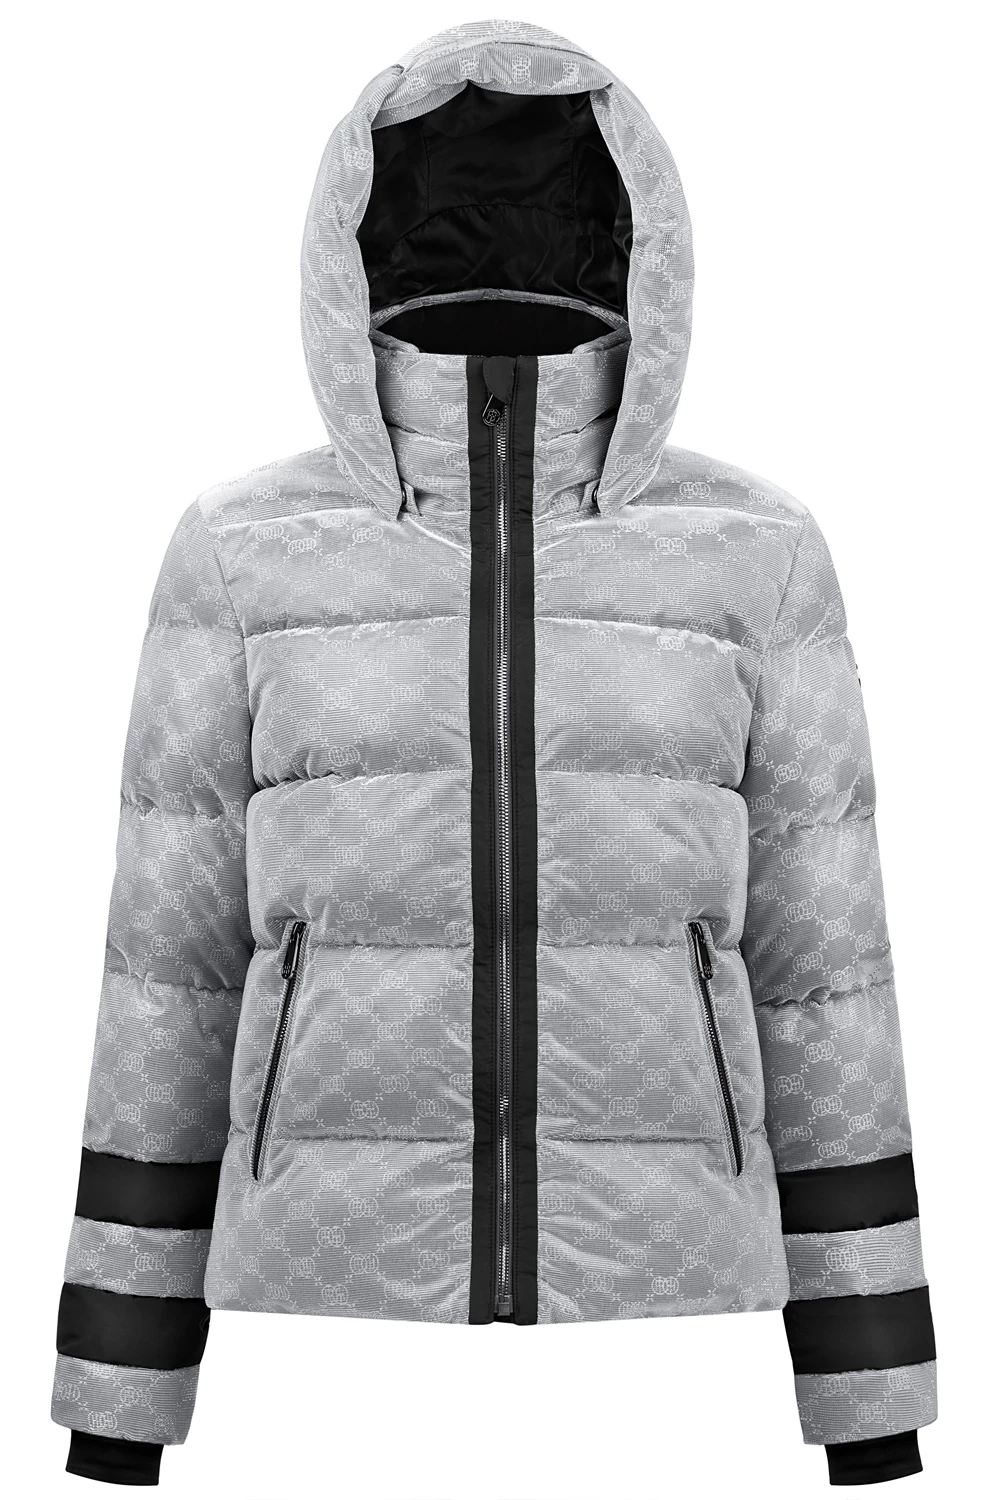 https://www.skihut.nl/img/poivre-blanc-synthetic-down-ski-jacket_1500x1500_162259.webp